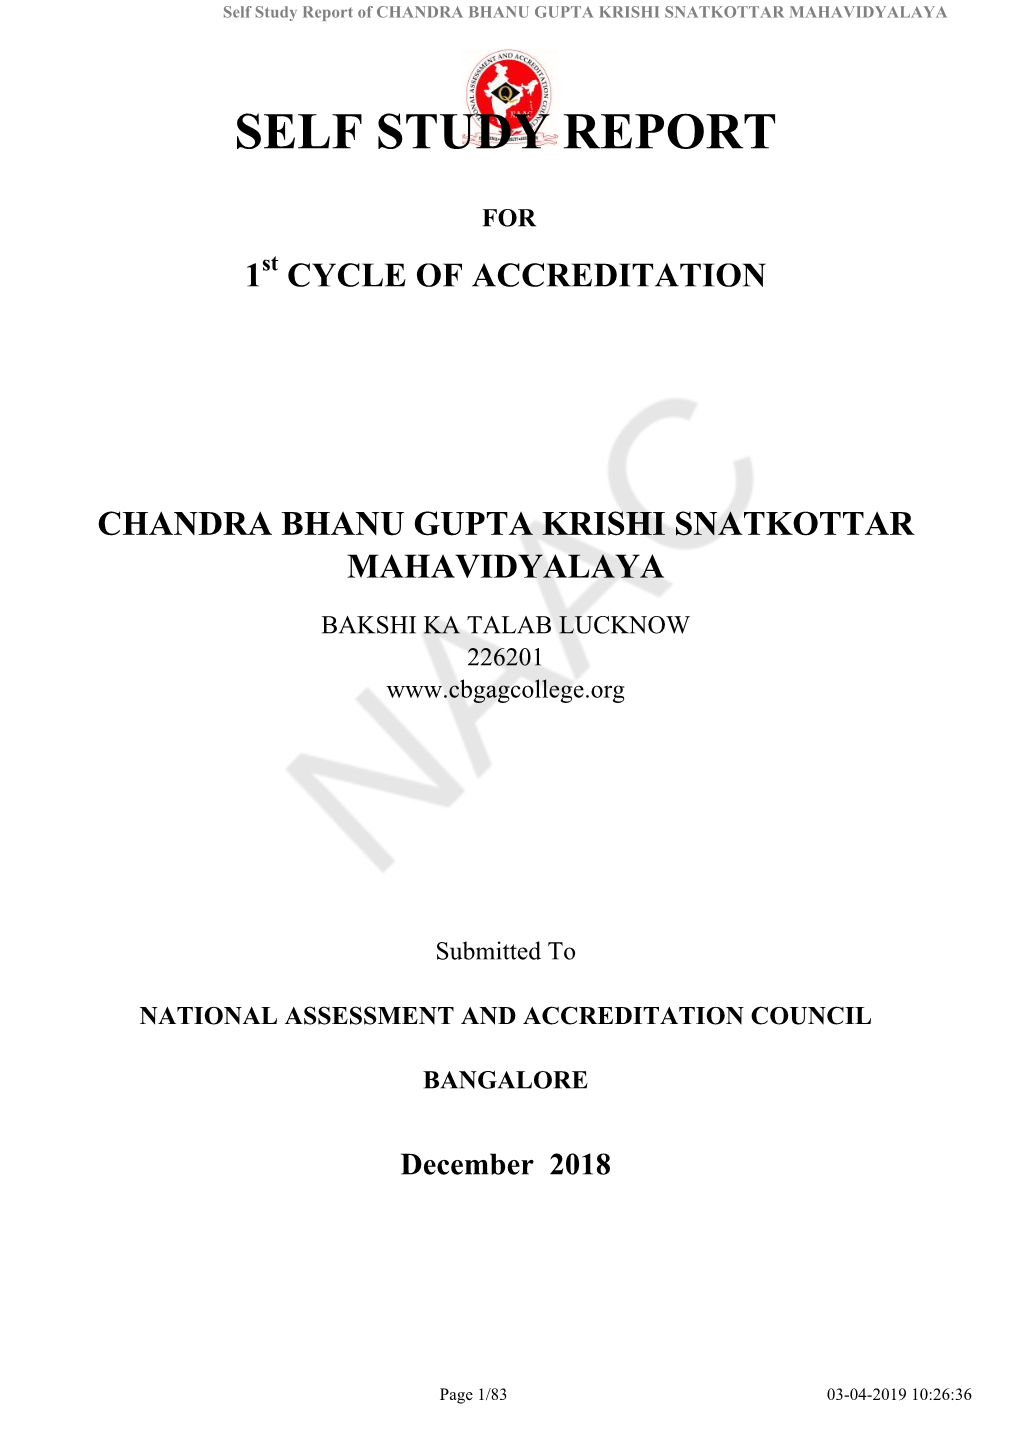 Self Study Report of CHANDRA BHANU GUPTA KRISHI SNATKOTTAR MAHAVIDYALAYA